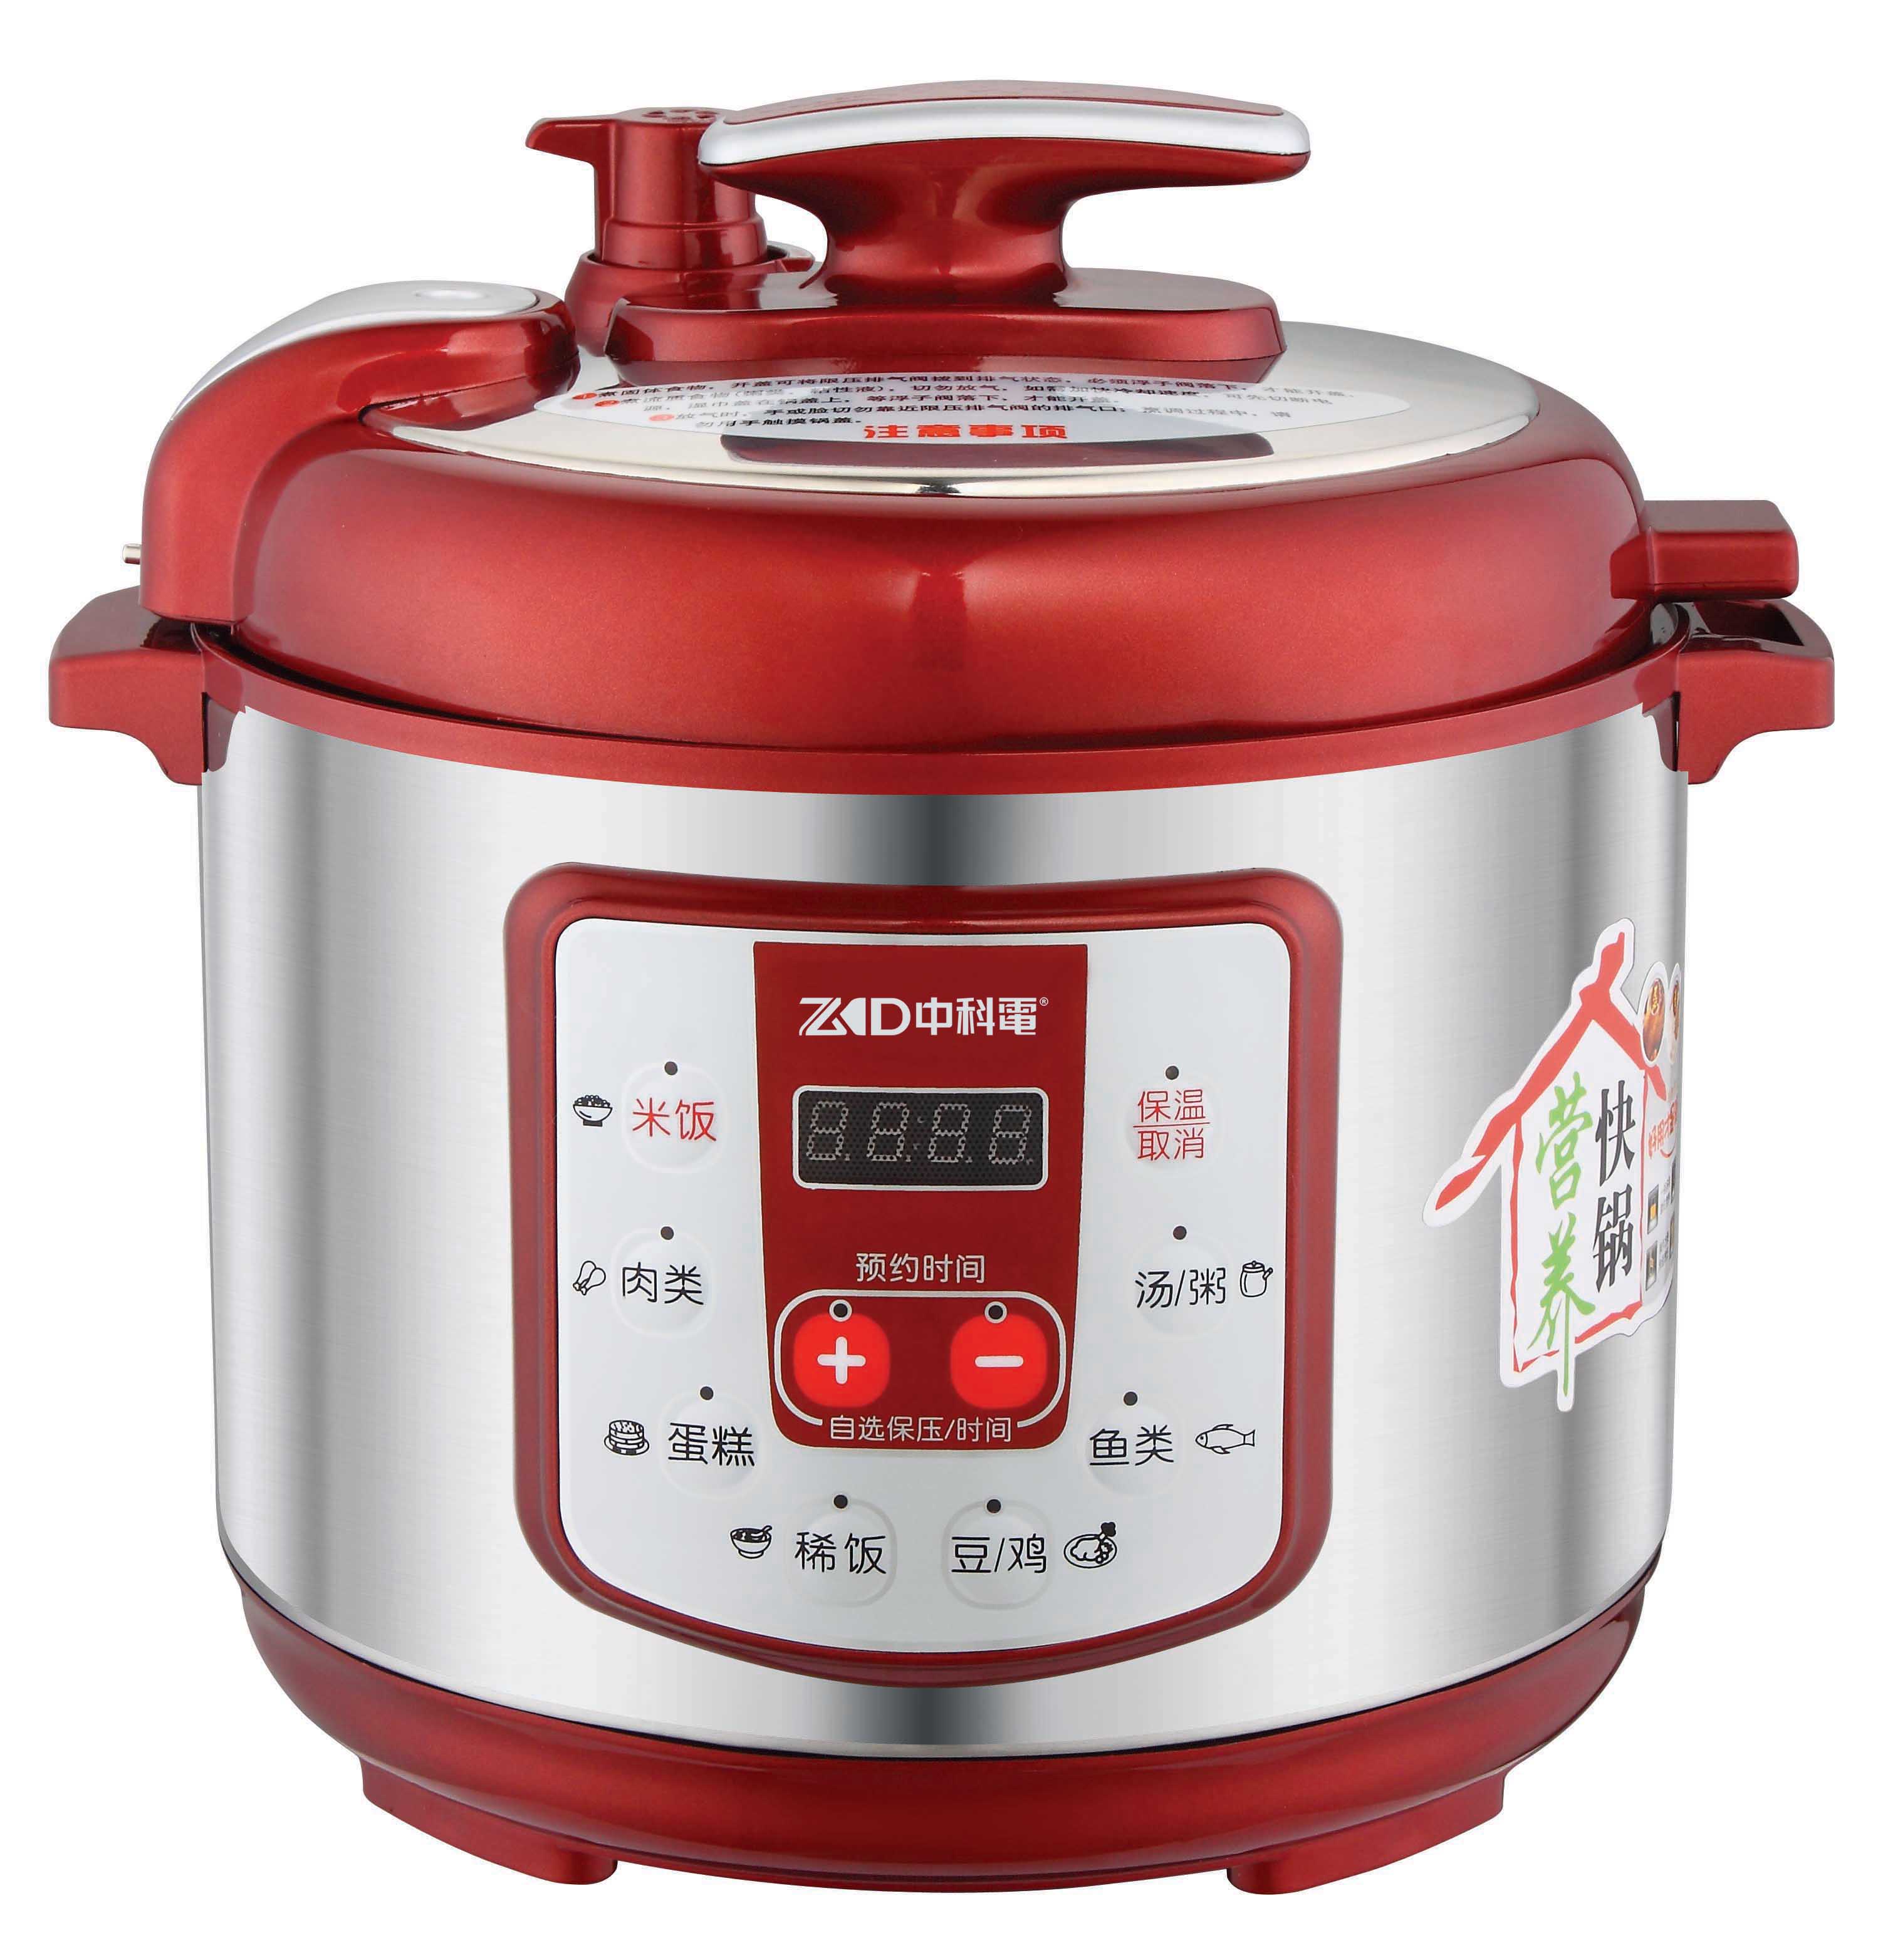 ZKD JIYUNSTARA (red)Cybernation Pressure Cooker 6L Capacity